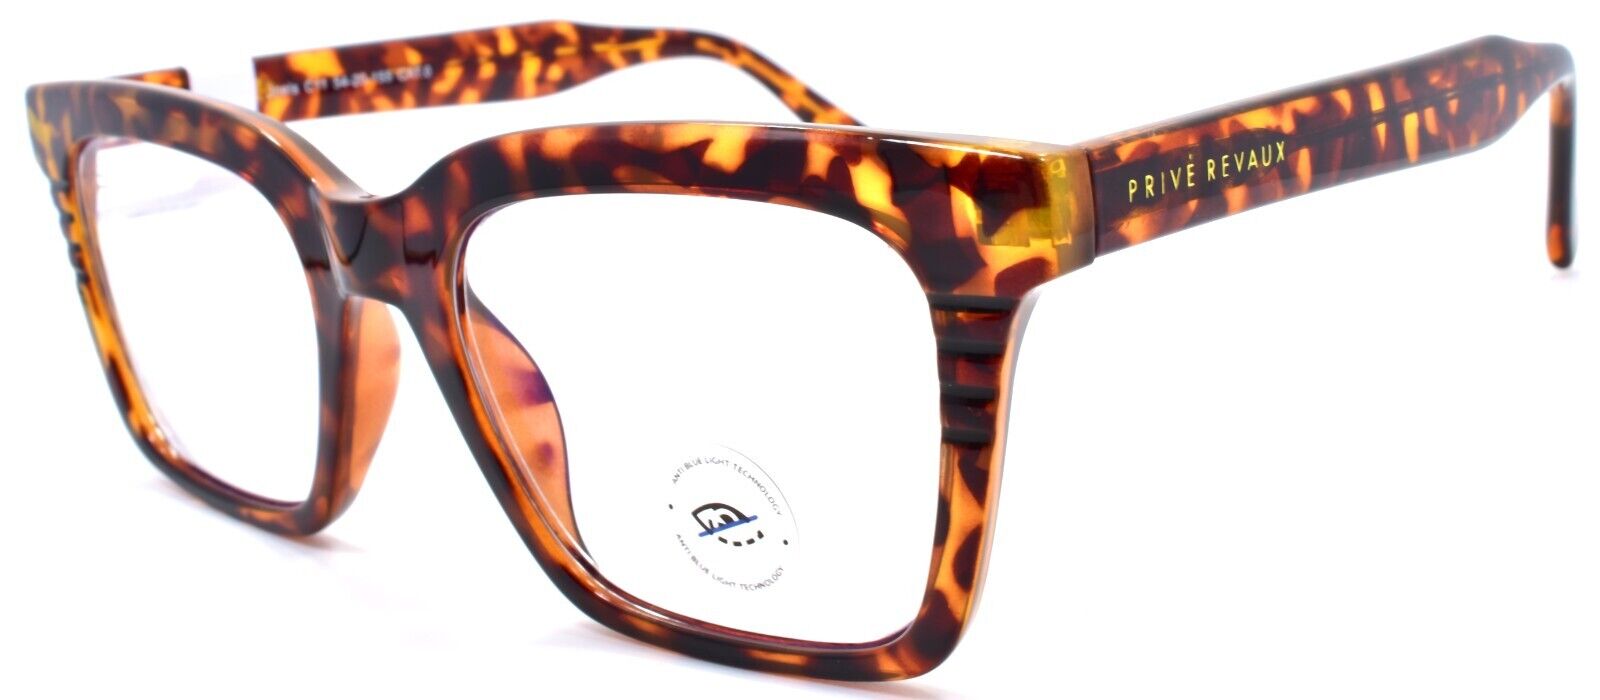 1-Prive Revaux Joels Eyeglasses Frames Blue Light Blocking RX-ready Tortoise-810047310457-IKSpecs